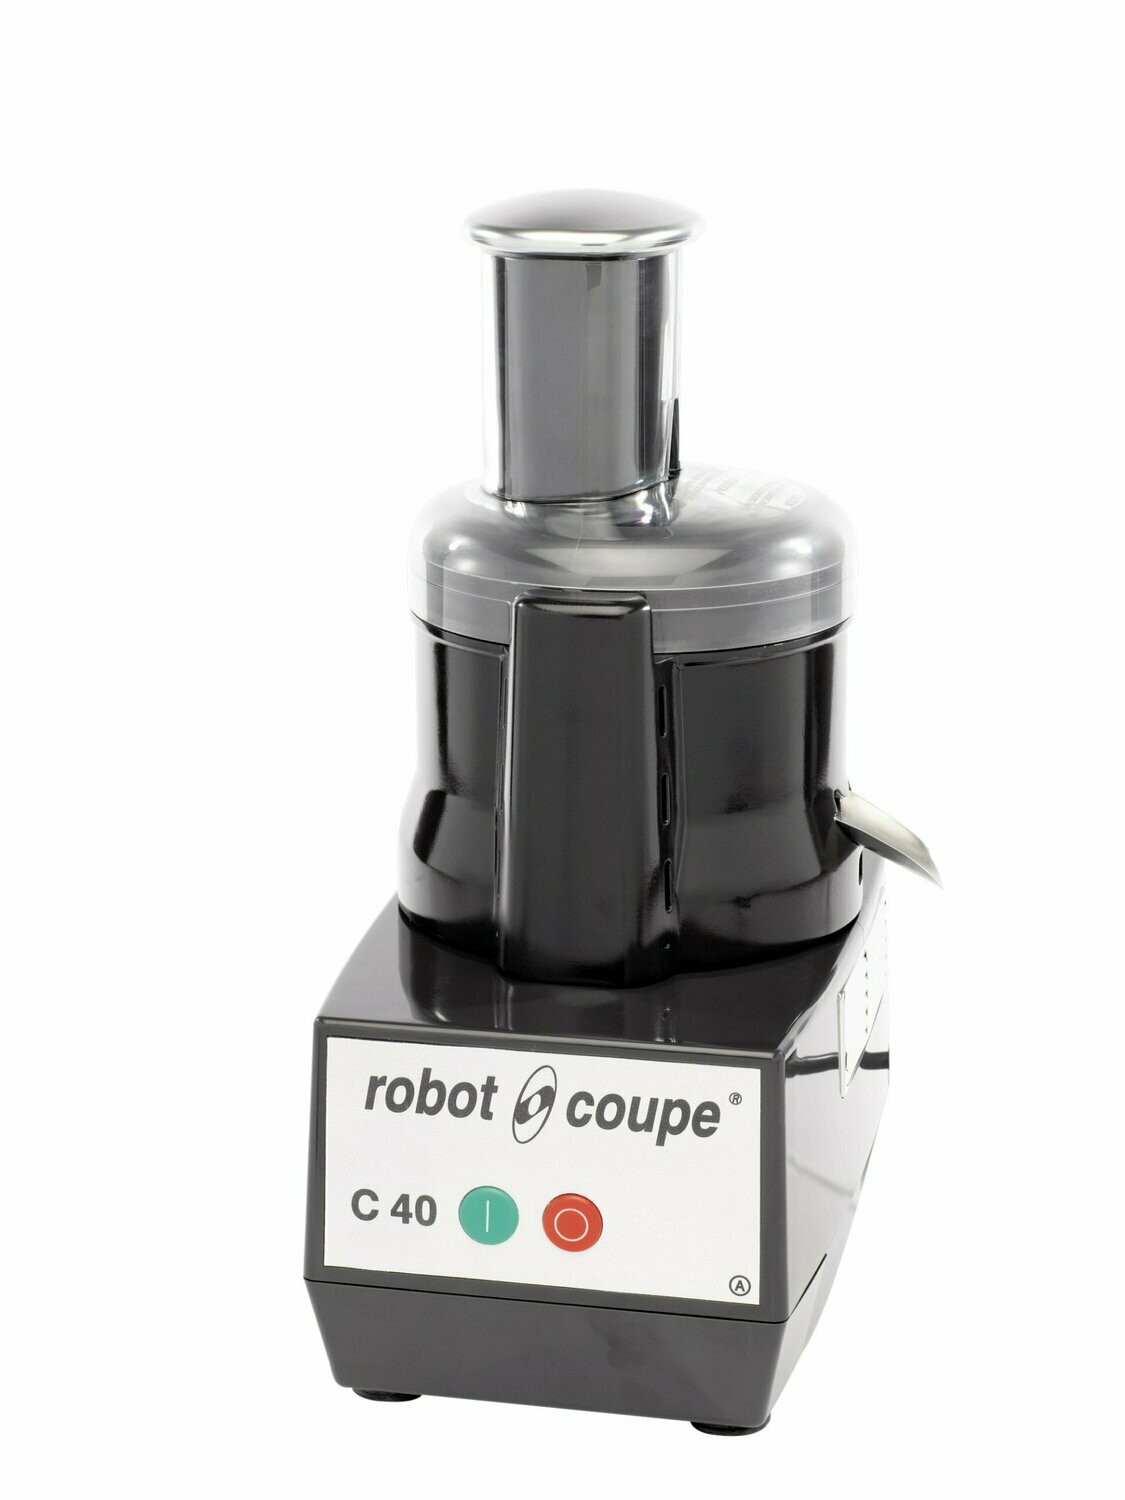 Robot Coupe C40 Press Coulis